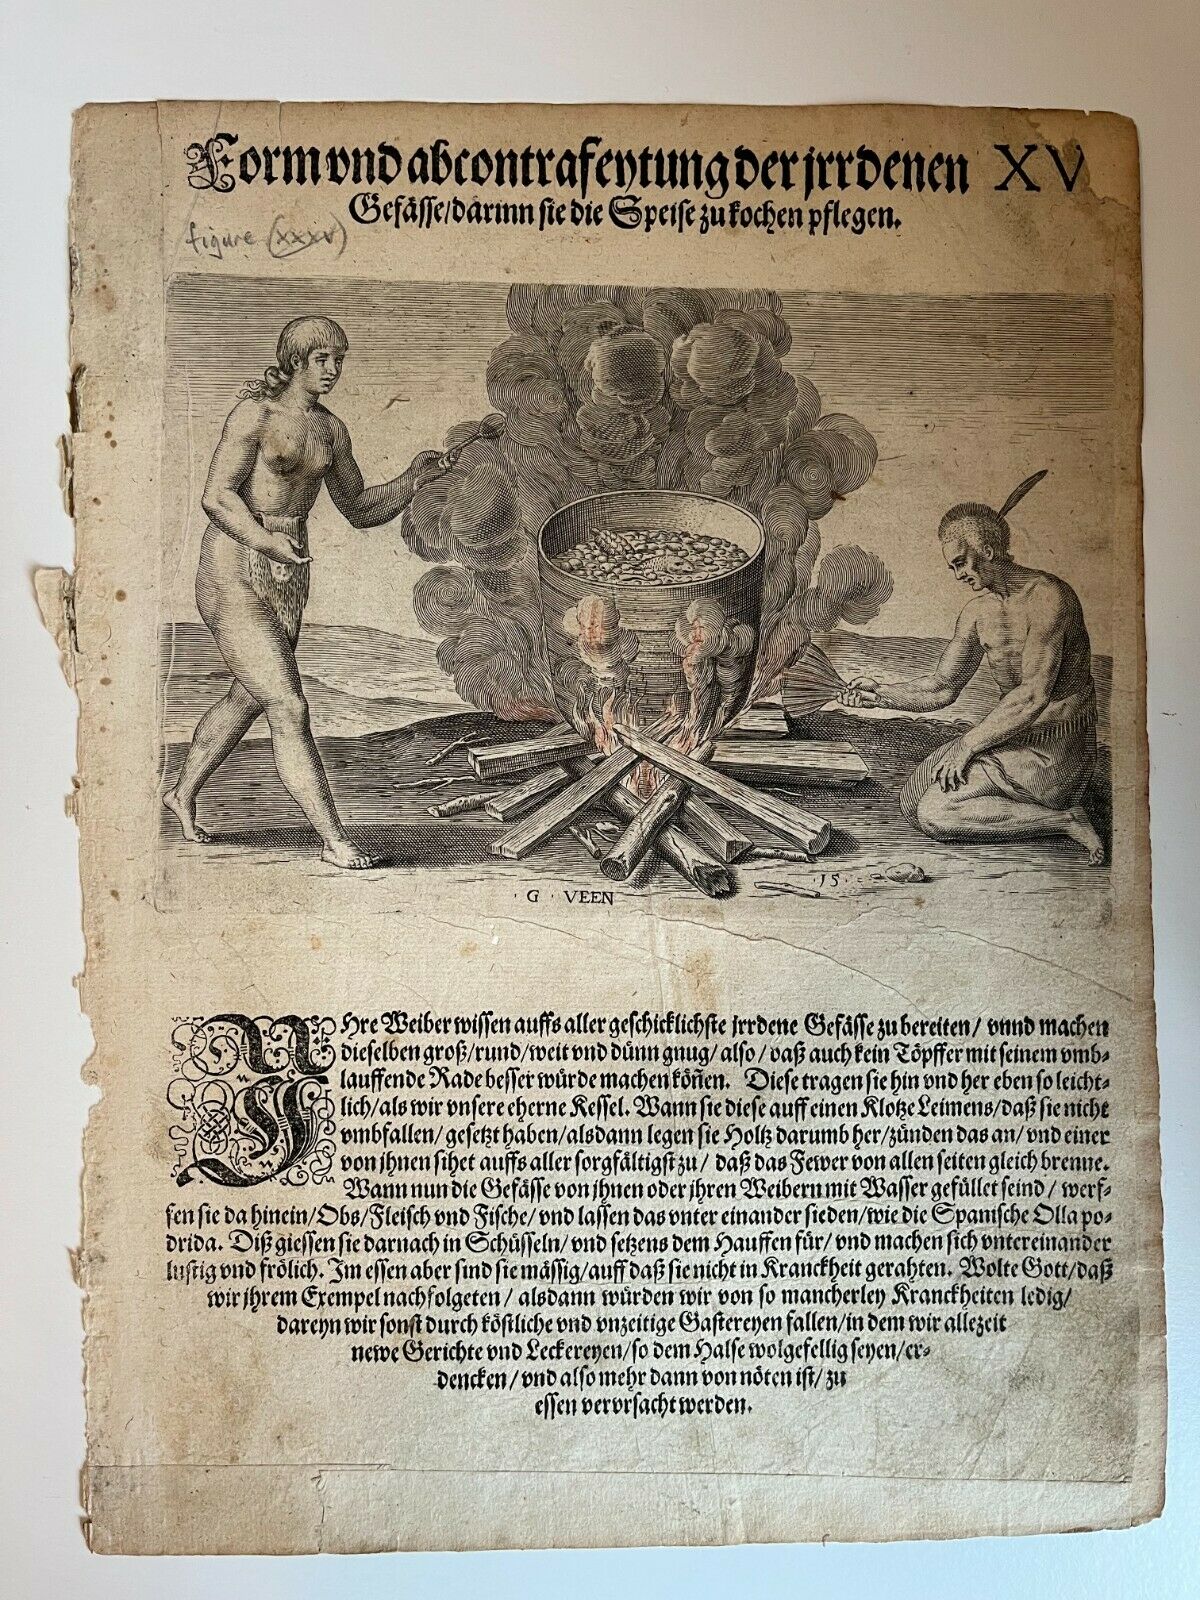 De Bry -“How they cook fish over flame" - 1590 - Virginia - Roanoke - Algonquian